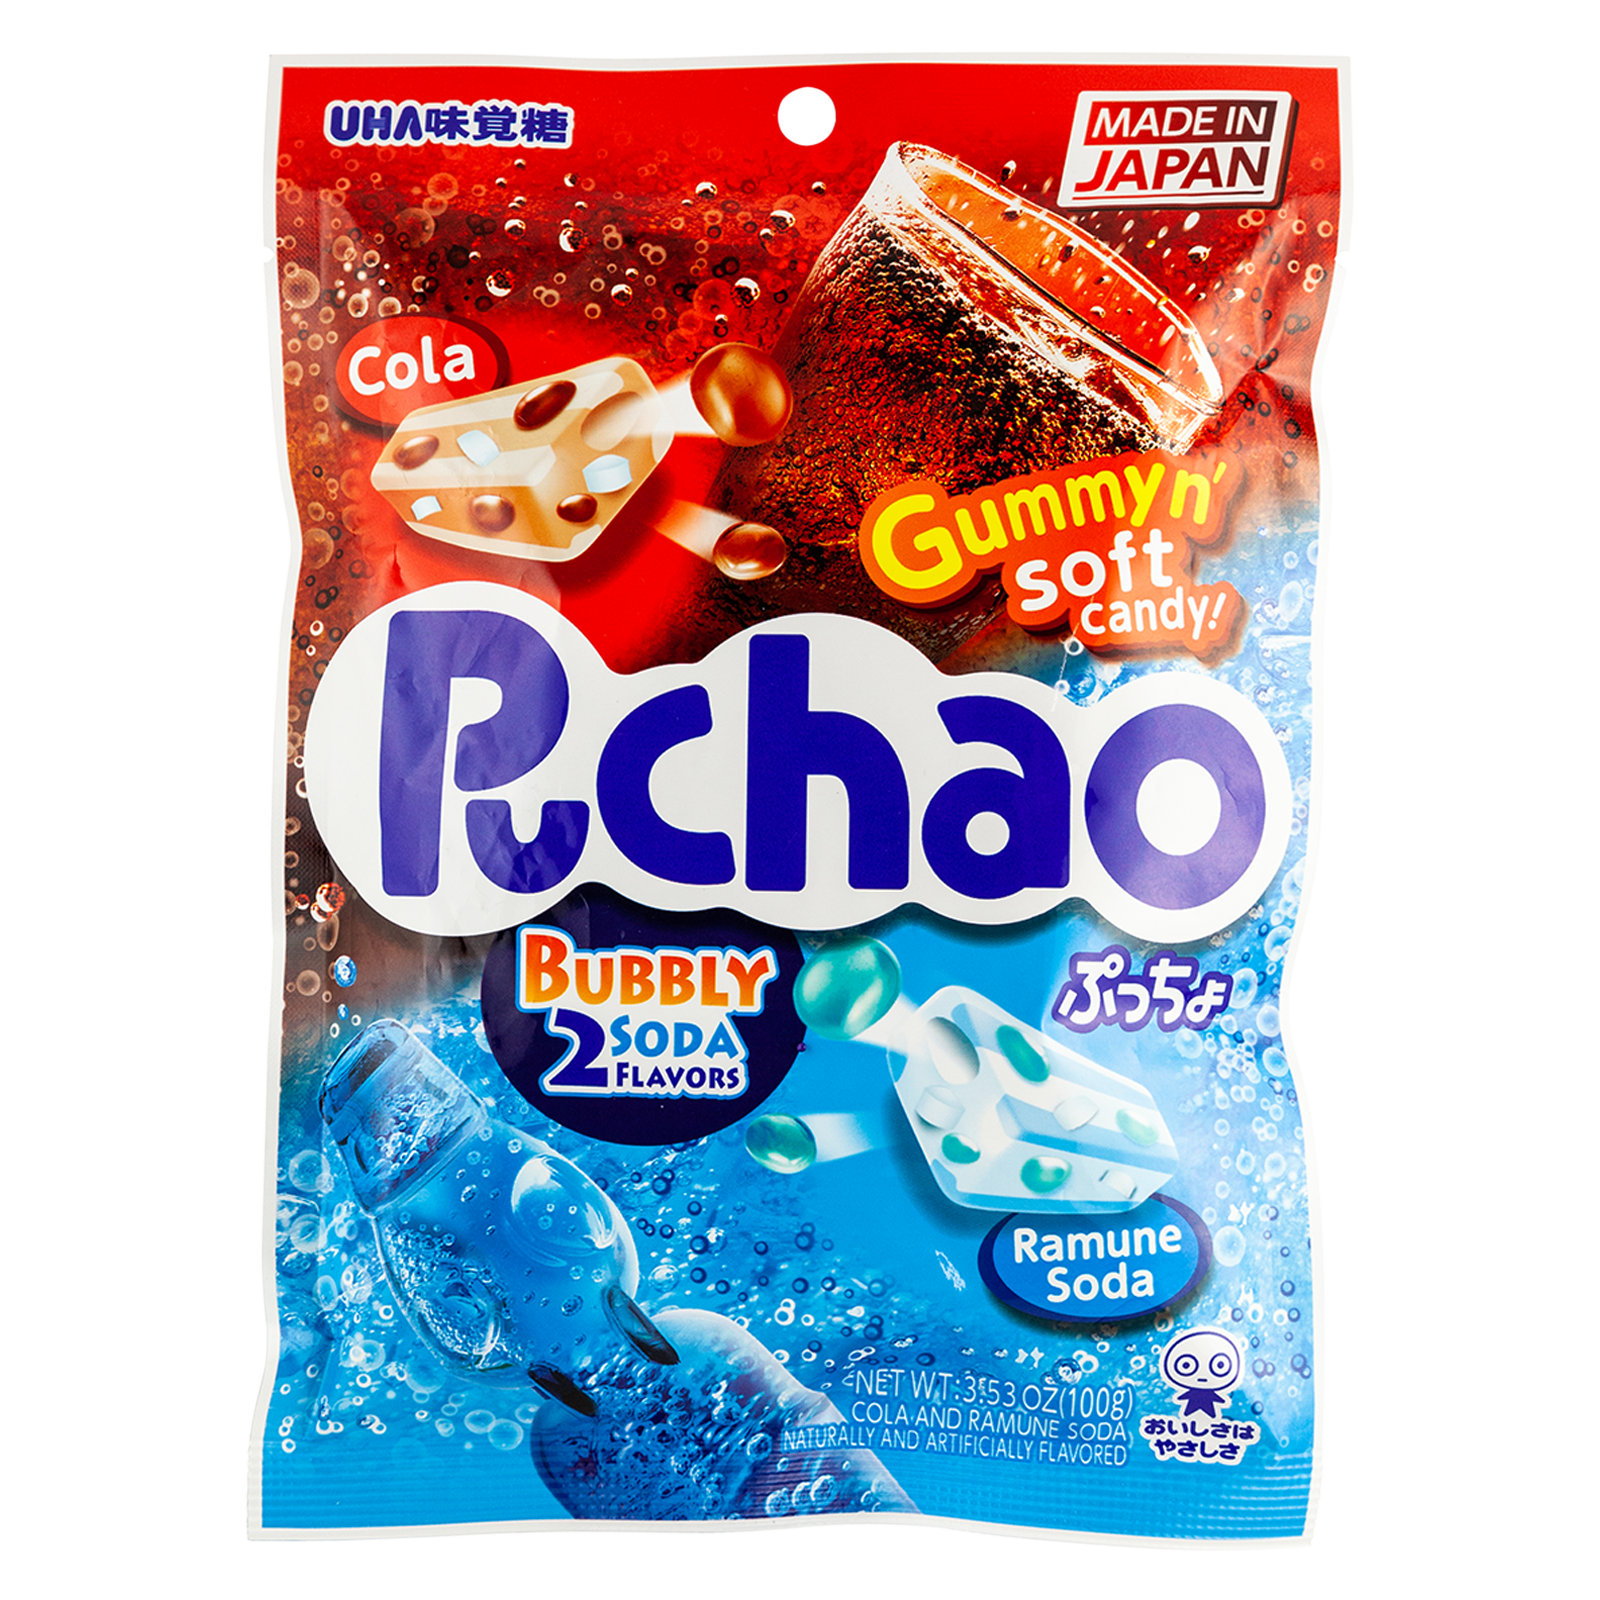 UHA Puchao Cola & Ramune Soda Flavored Candy 3.53oz